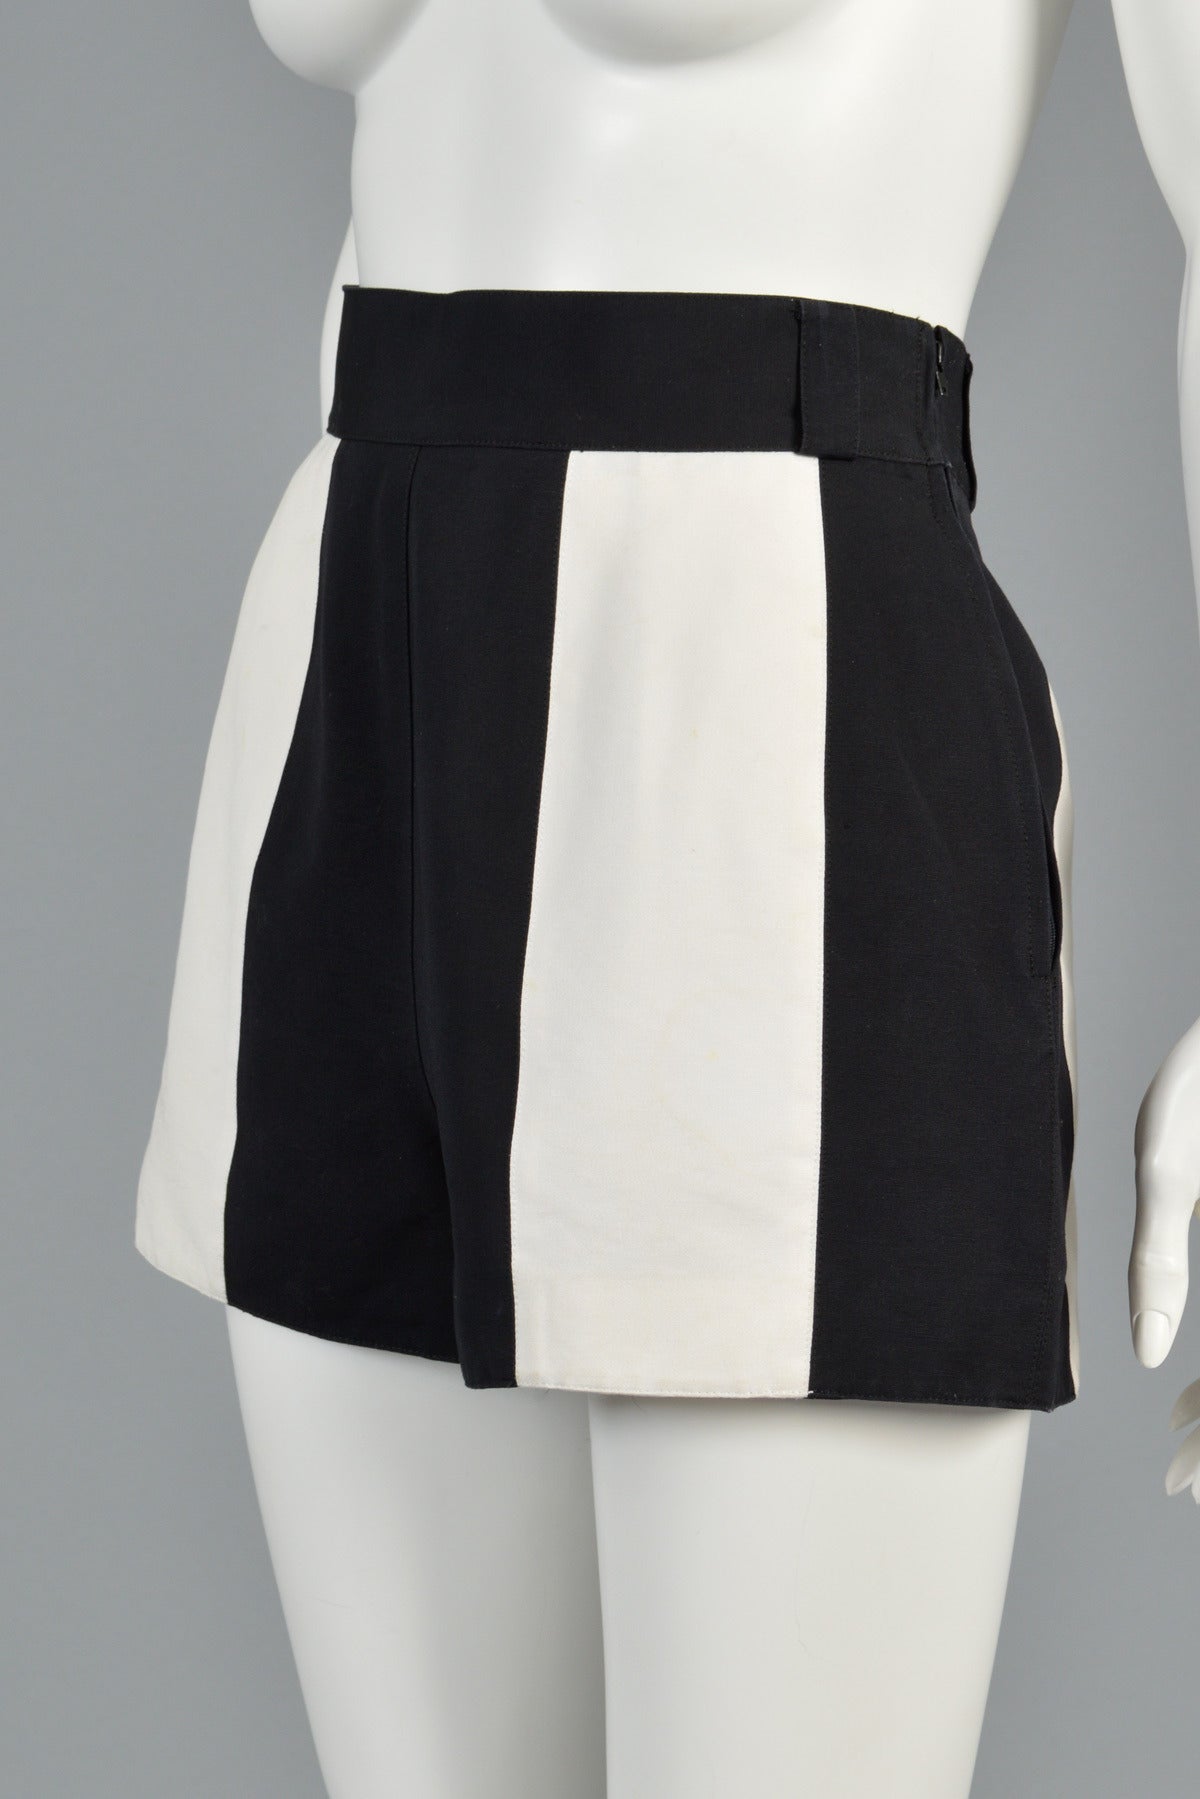 Claude Montana Black + White Colorblock Shorts For Sale 2